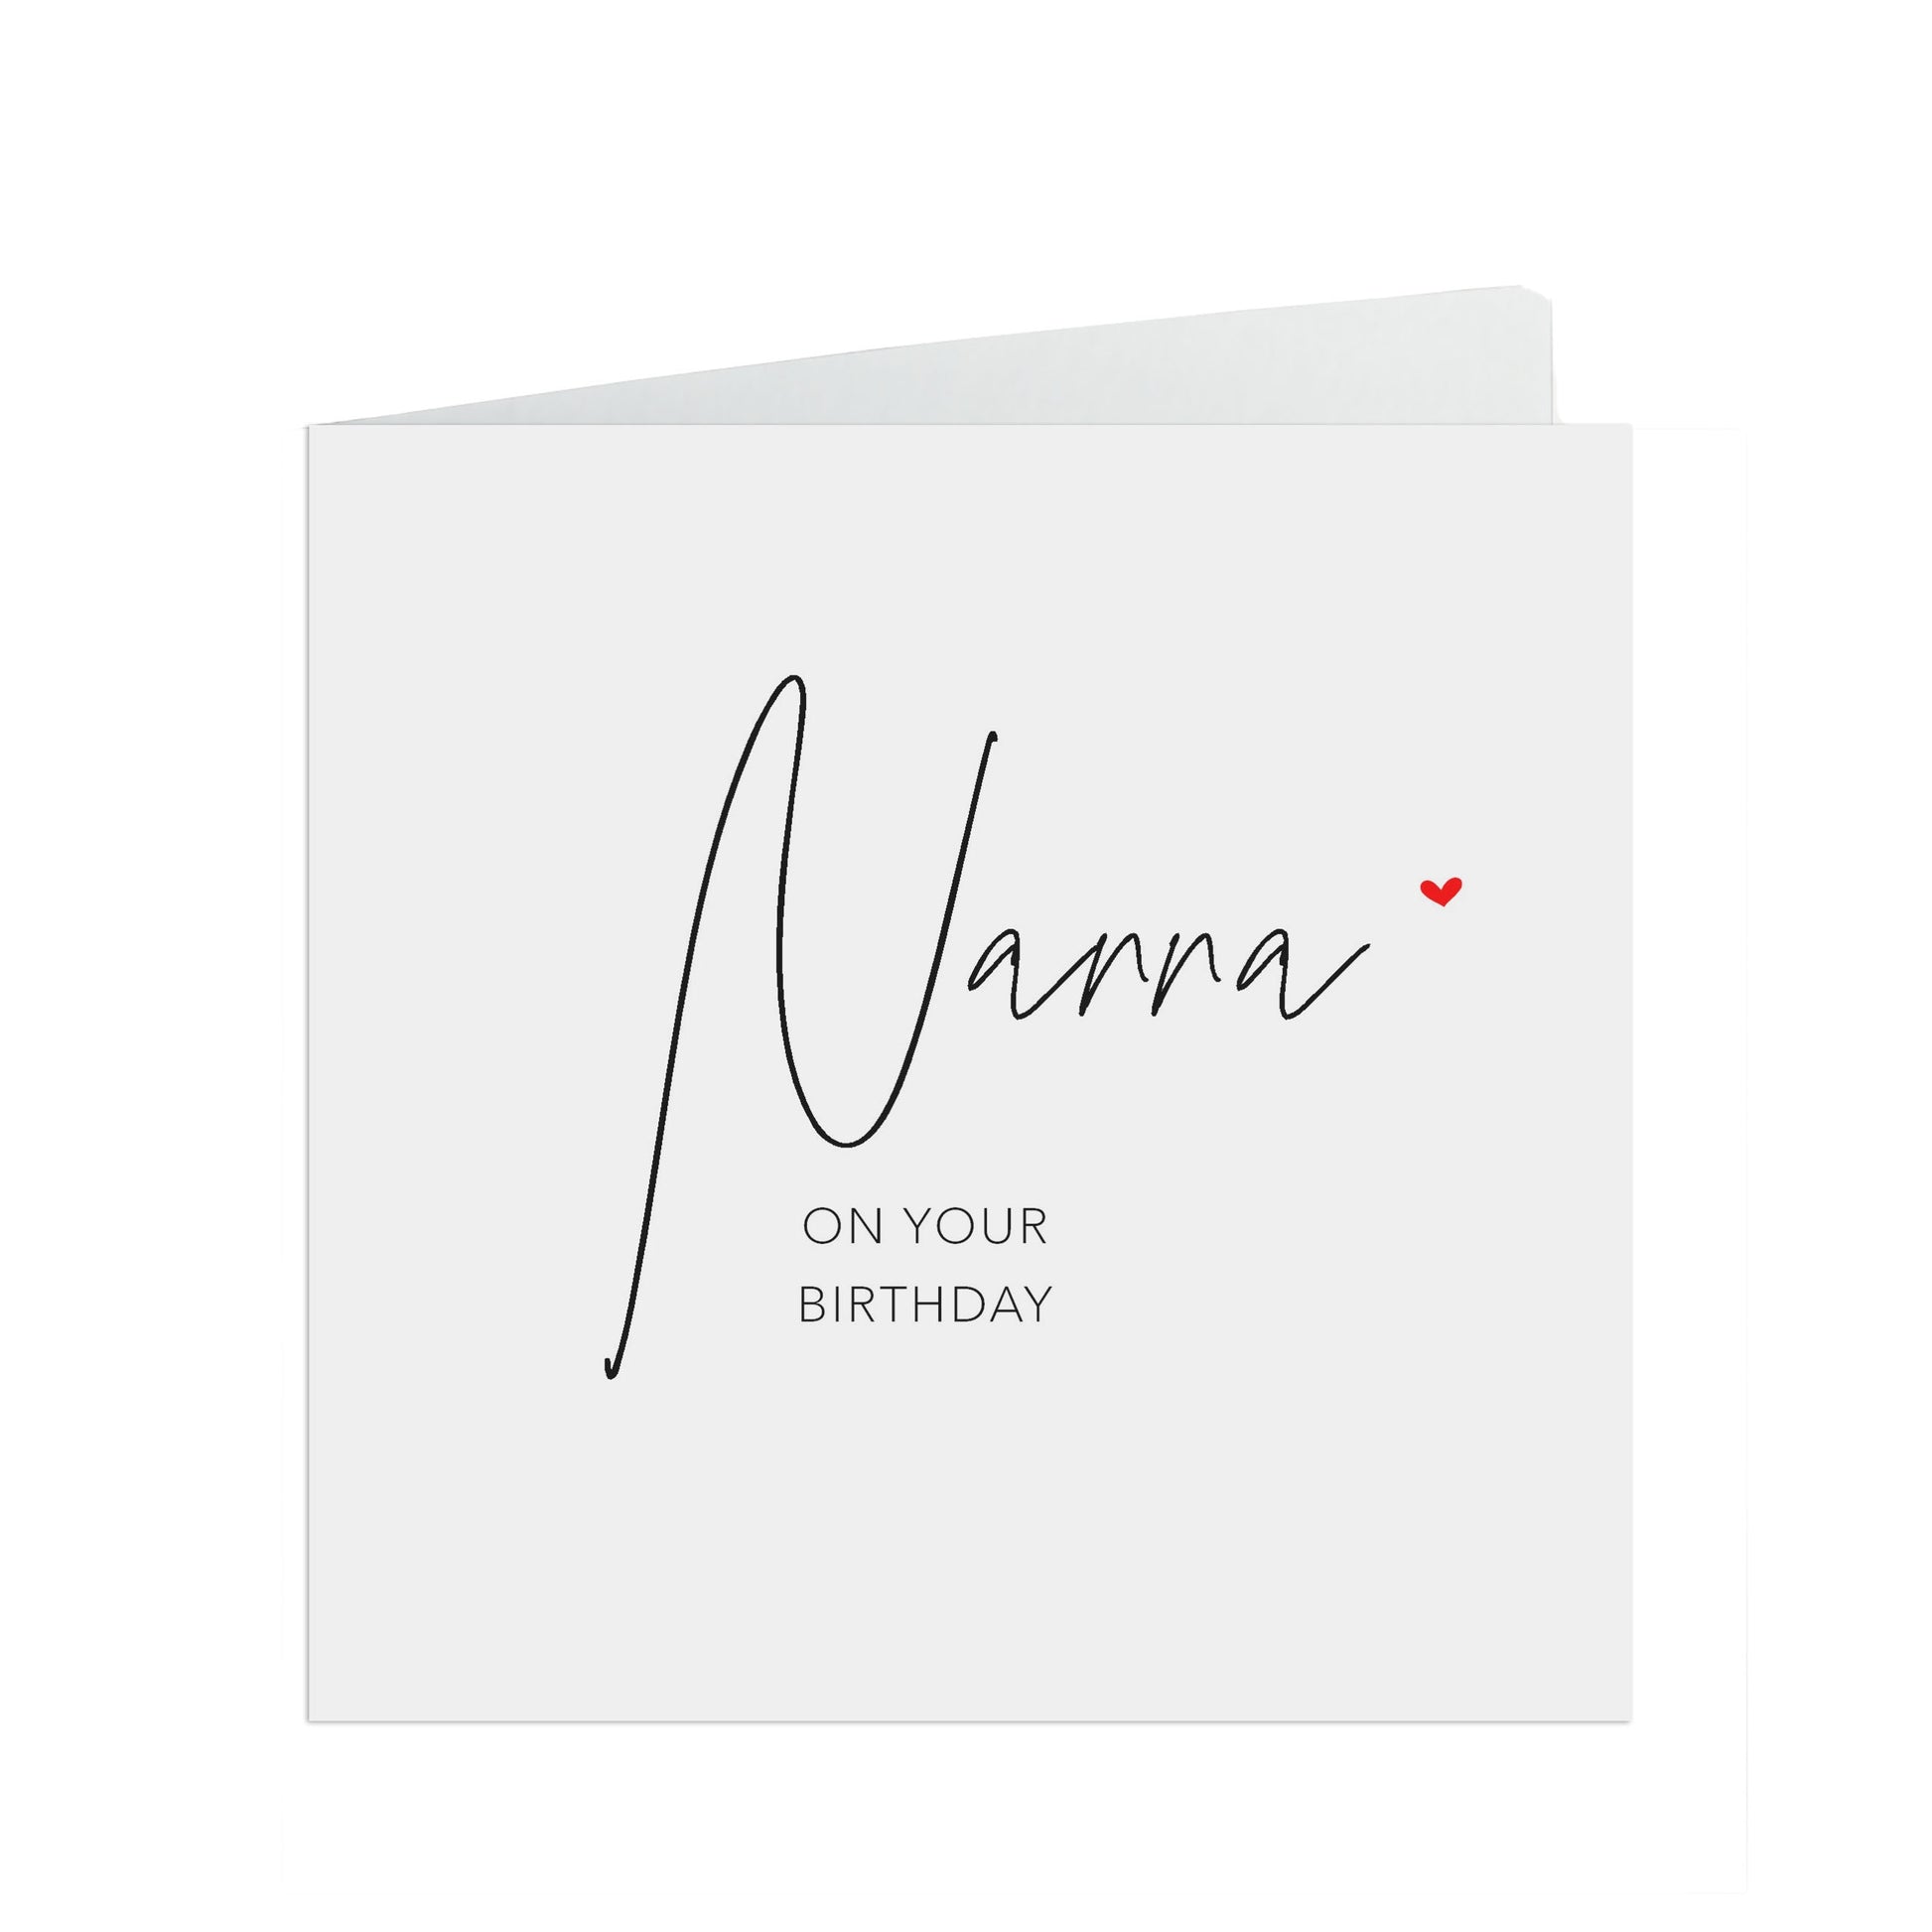 Nanna Birthday Card, Simple Birthday Card